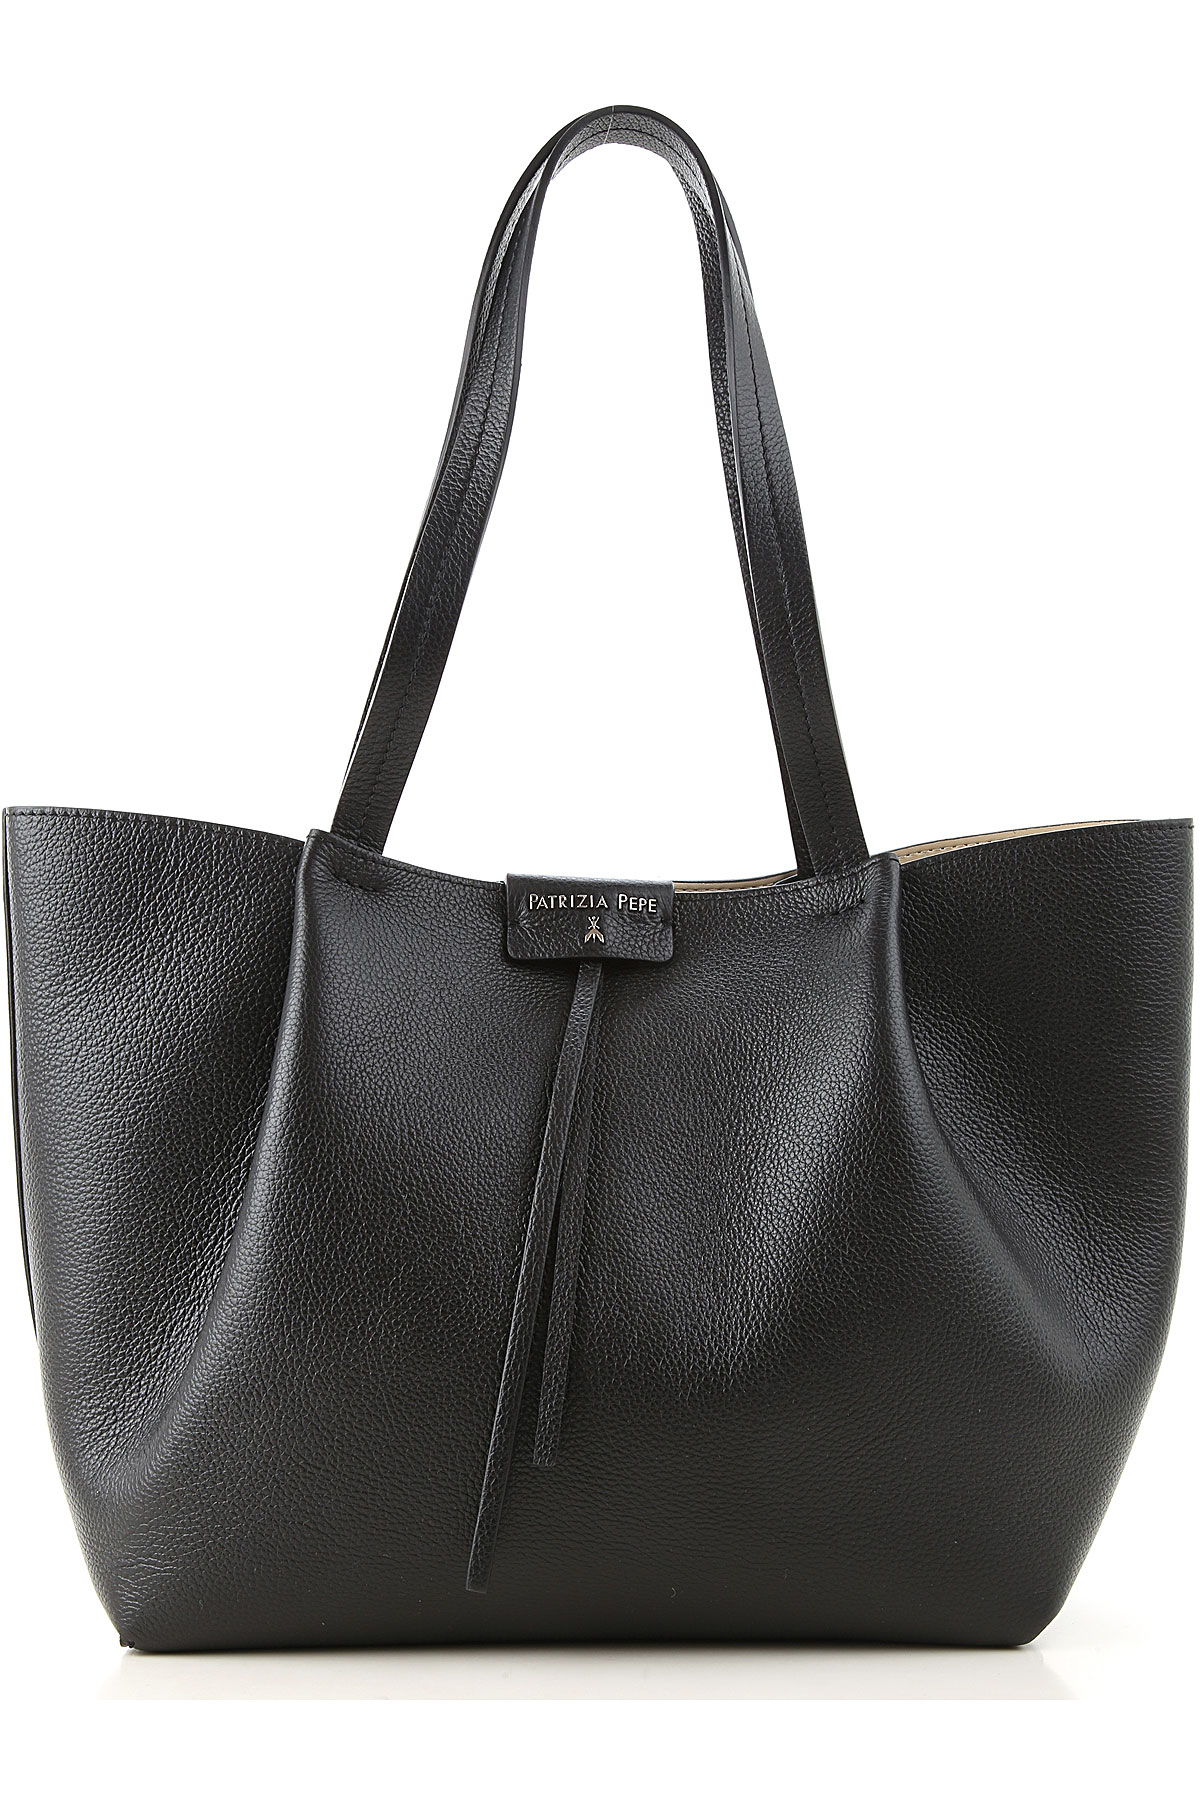 Handbags Patrizia Pepe, Style code: 2v8895-a4u8s-k103